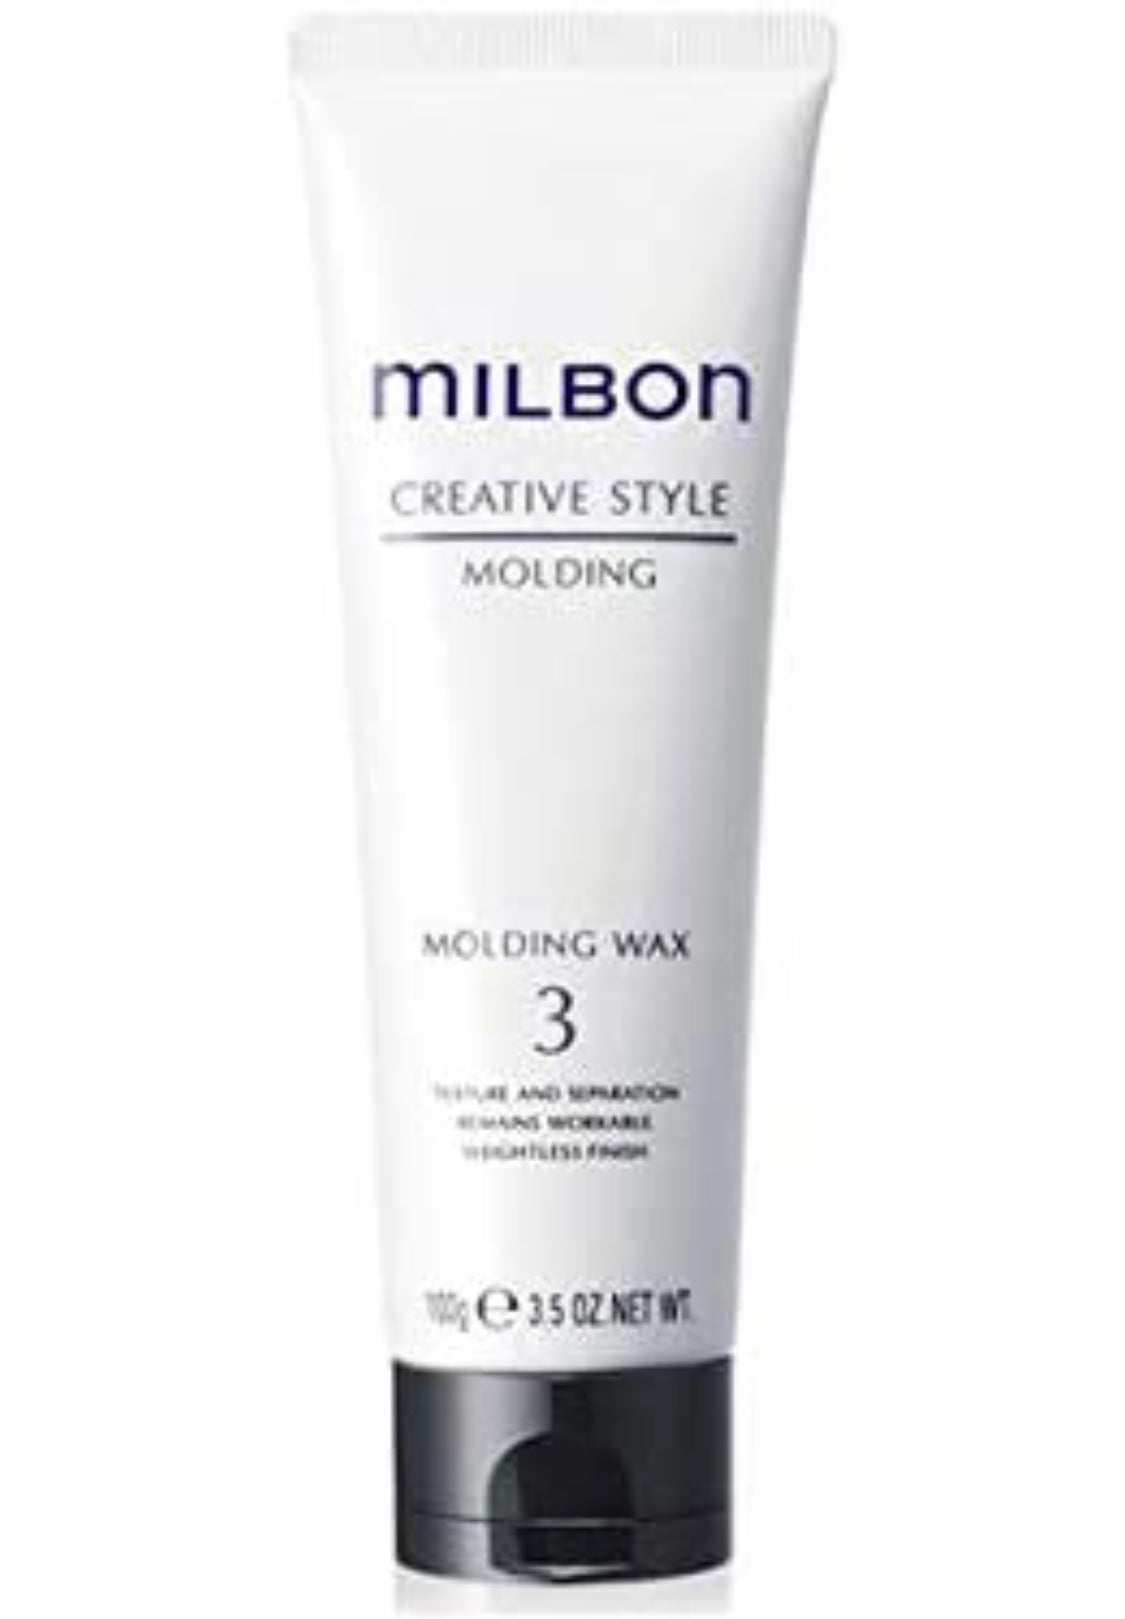 Milbon - Creative style Molding wax #3 3.5 fl. oz. / 100 gr